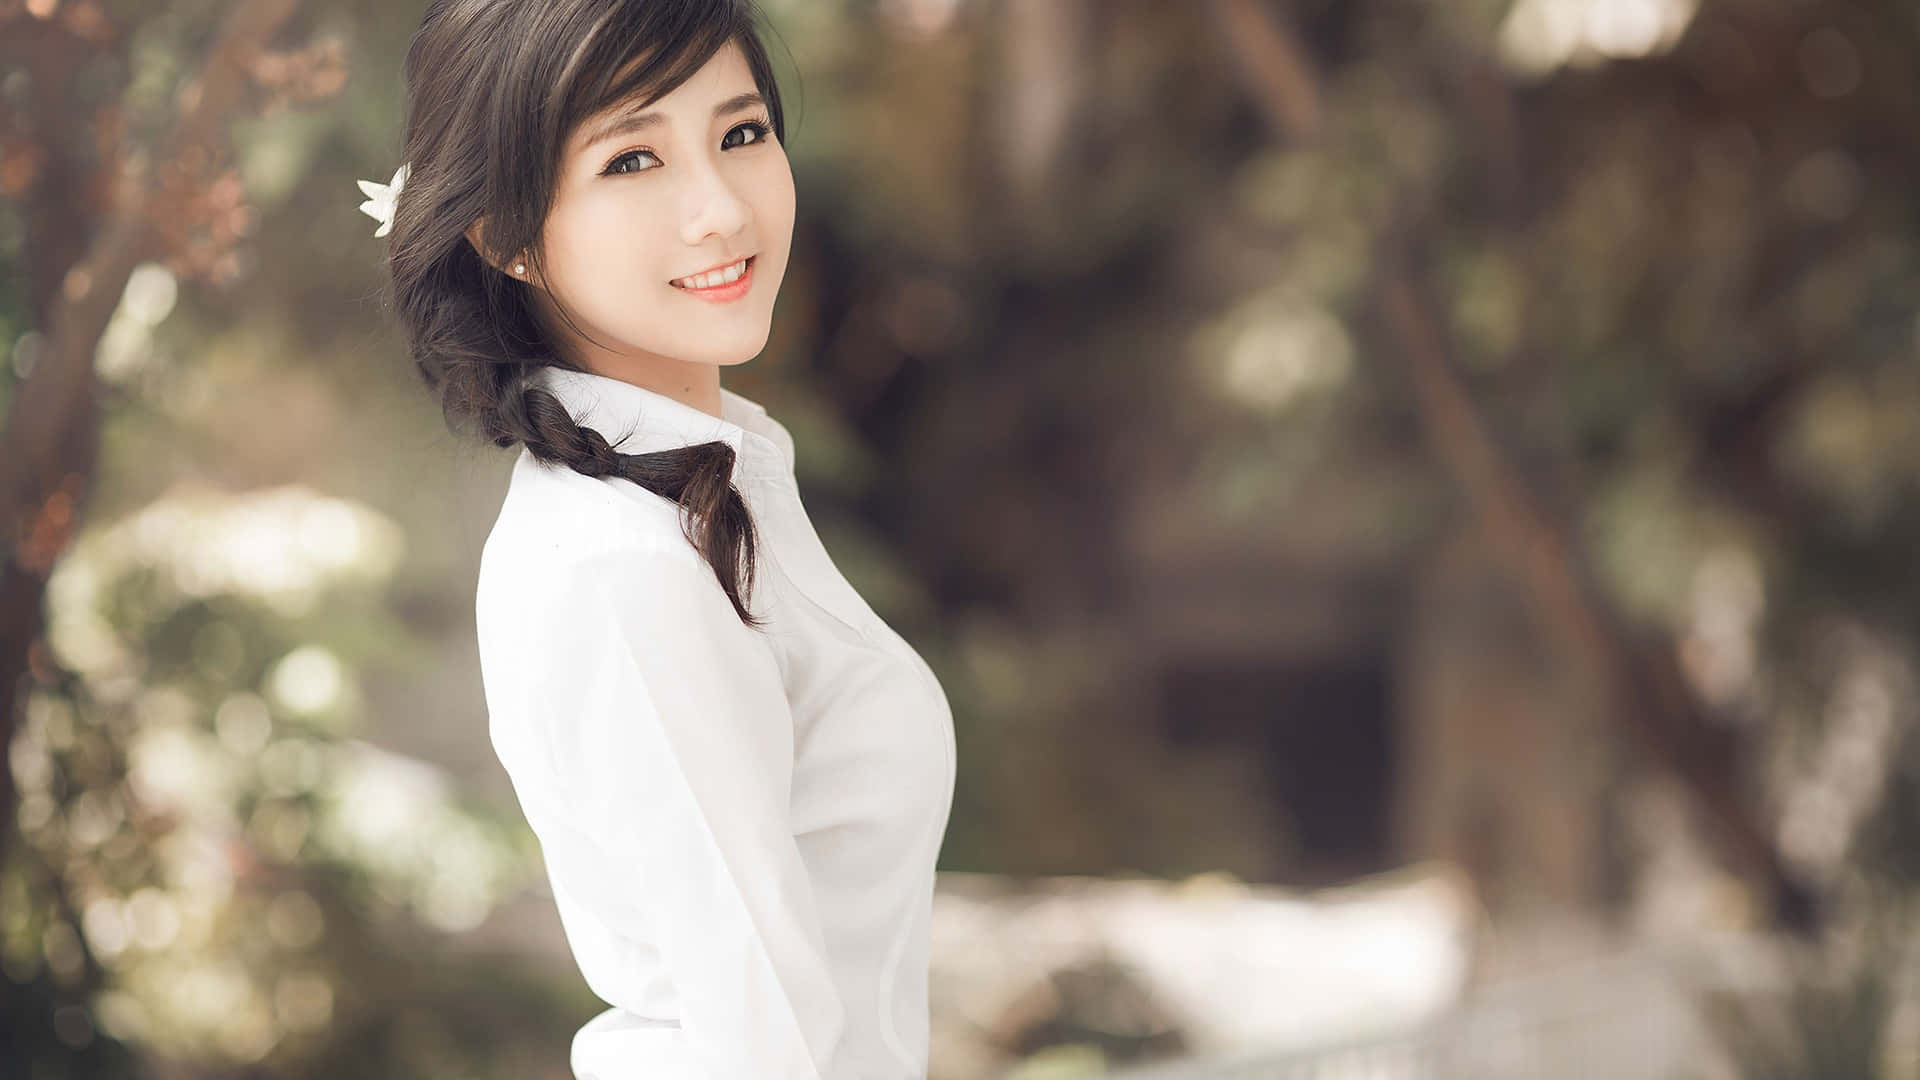 Asian Girl In White Shirt Posing For A Photo Wallpaper